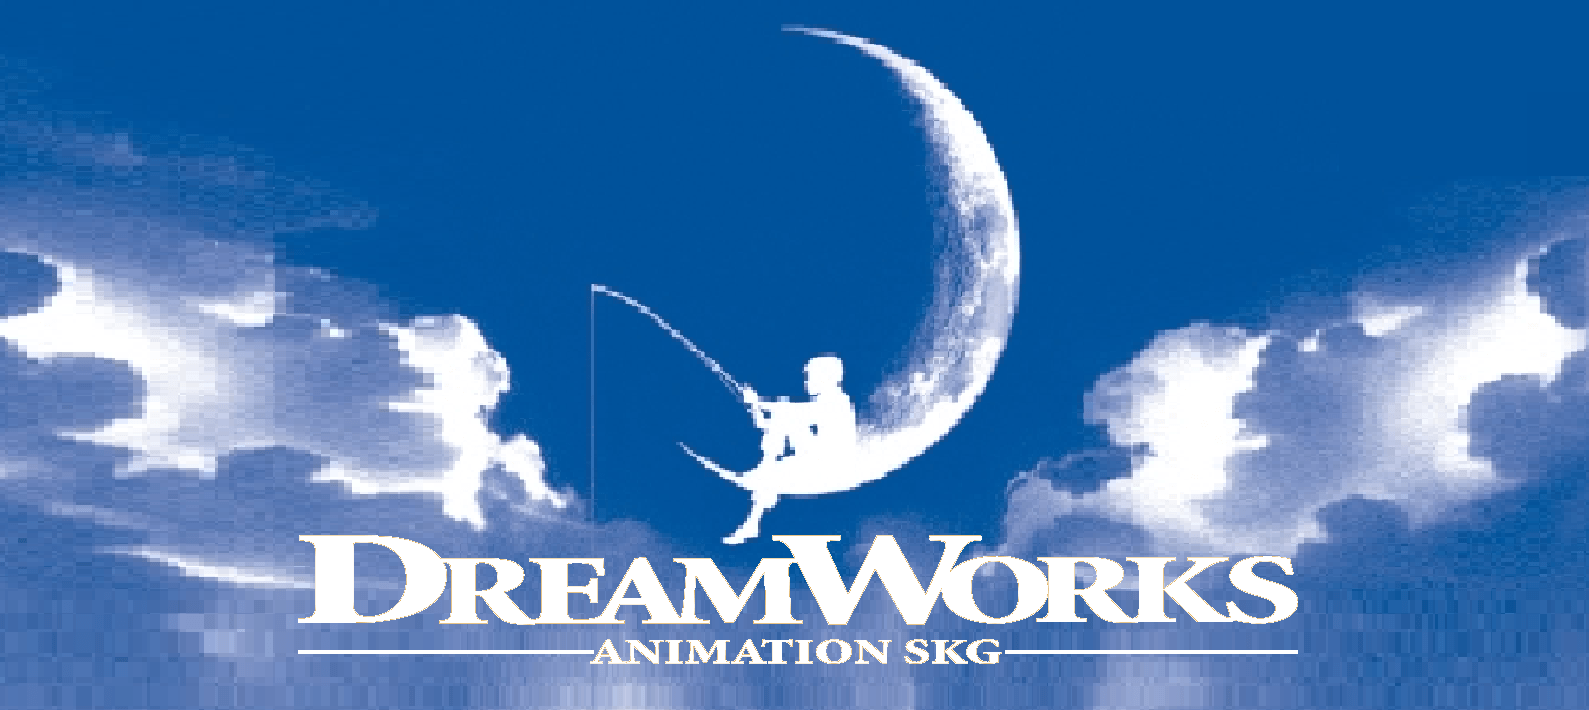 DreamWorks Animation SKG Logo - Image - DreamWorks Animation new print logo 1.png | The Idea Wiki ...